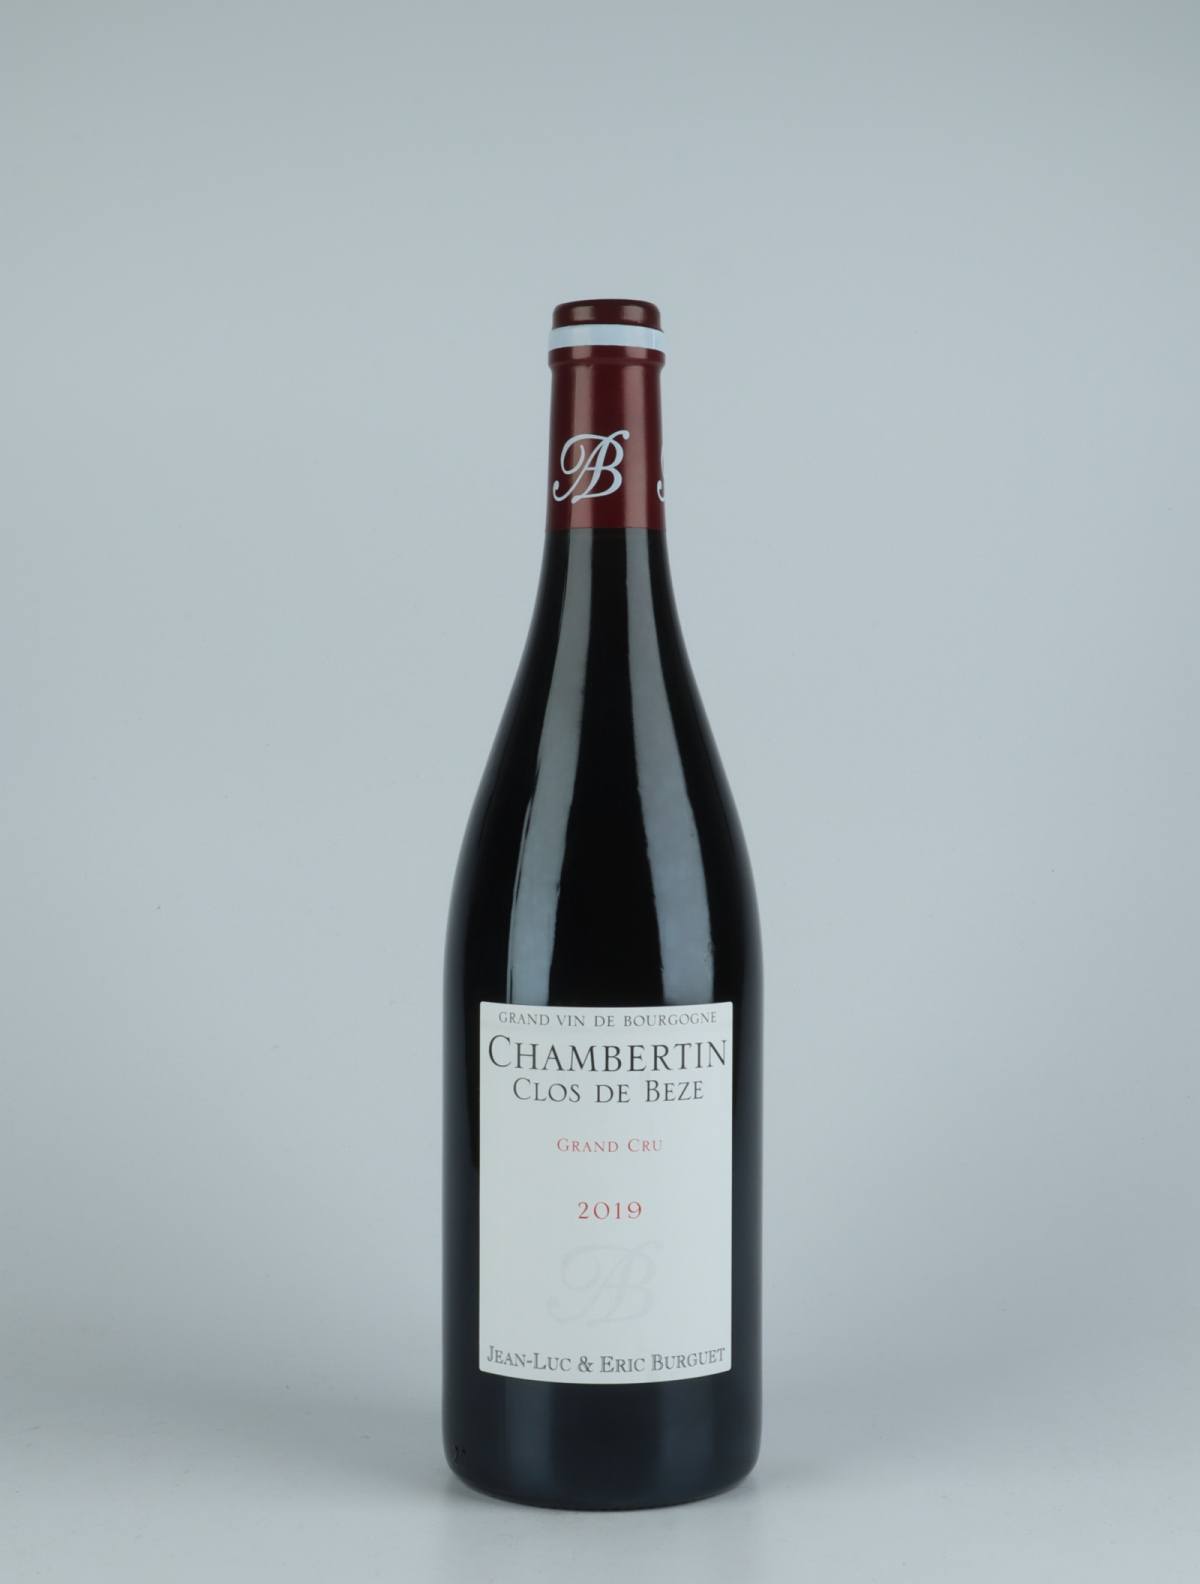 En flaske 2019 Chambertin Clos de Bèze Rødvin fra Jean-Luc & Eric Burguet, Bourgogne i Frankrig